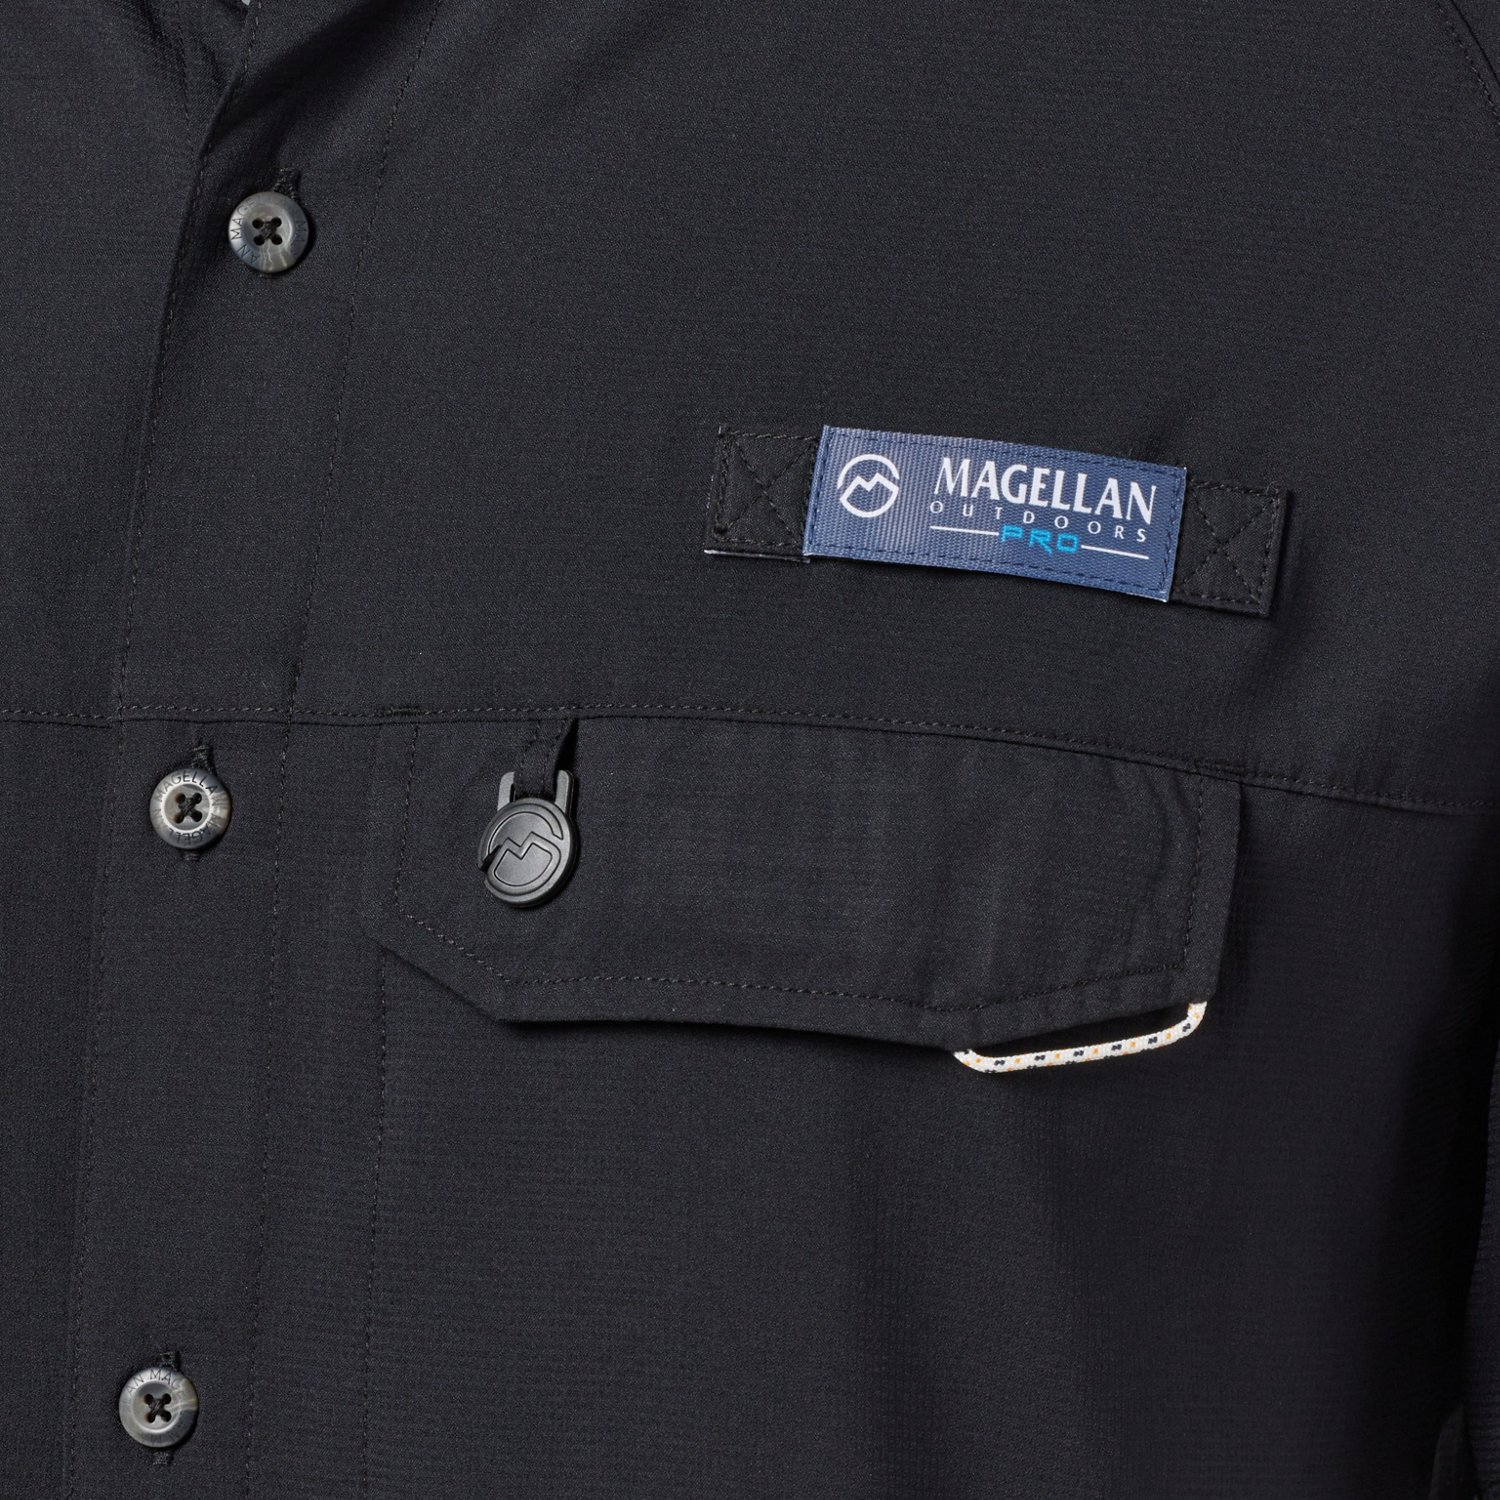 Magellan Outdoors Angler Fit Unisex S Short Sleeve Fishing Outdoors Shirt  Aqua